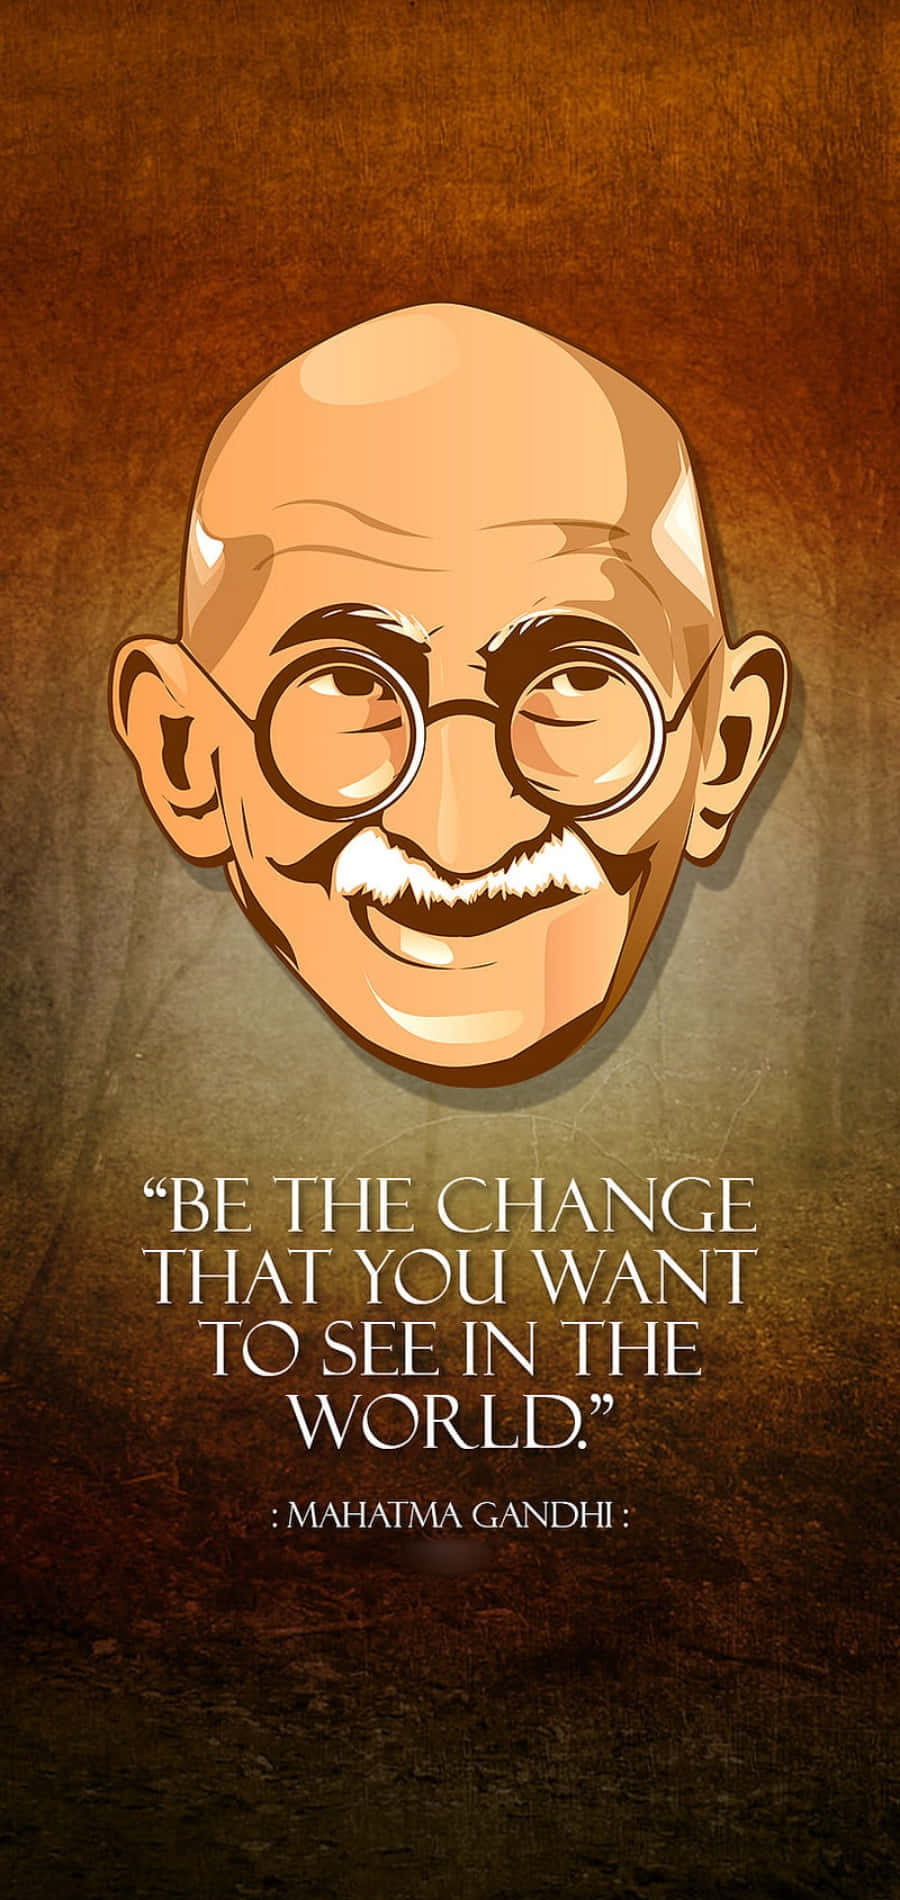 Inspiring Leadership of Mahatma Gandhi